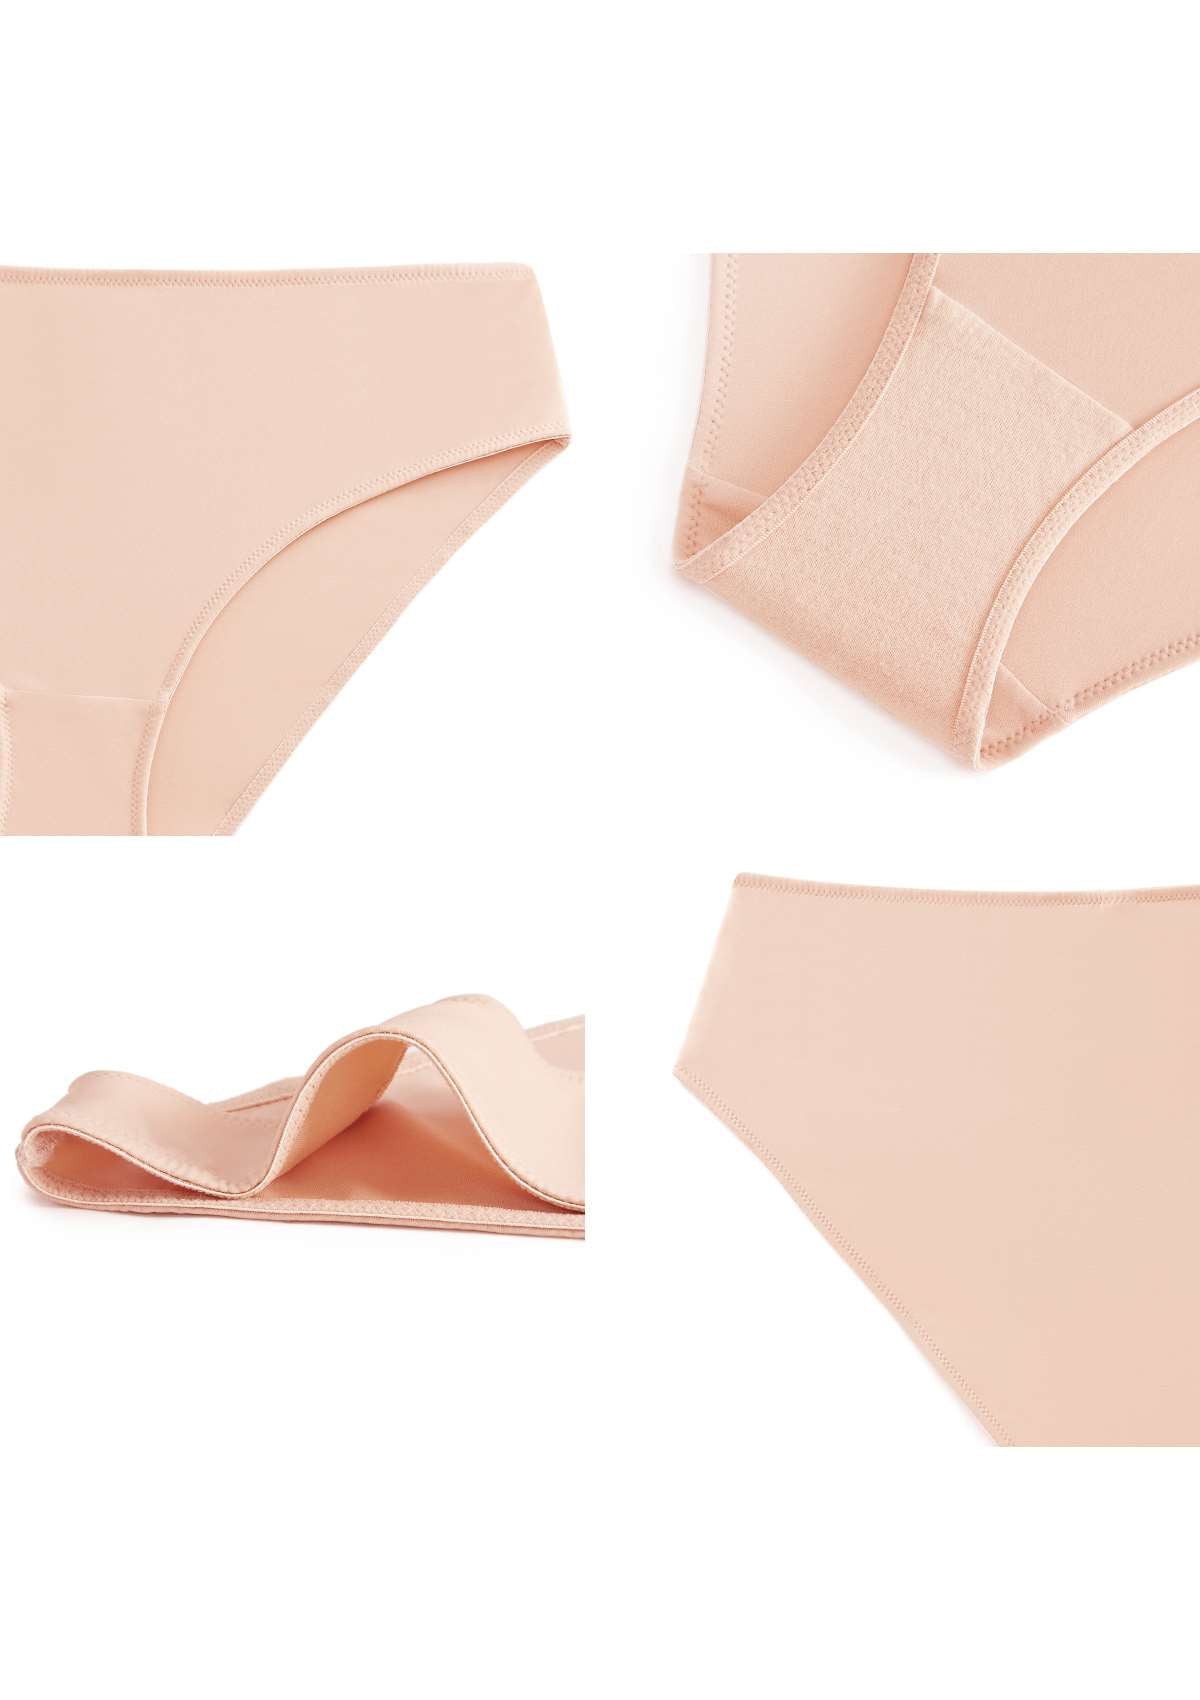 HSIA Patricia Smooth Soft Stretch Comfort High-Rise Brief Underwear - XXXL / Light Pink